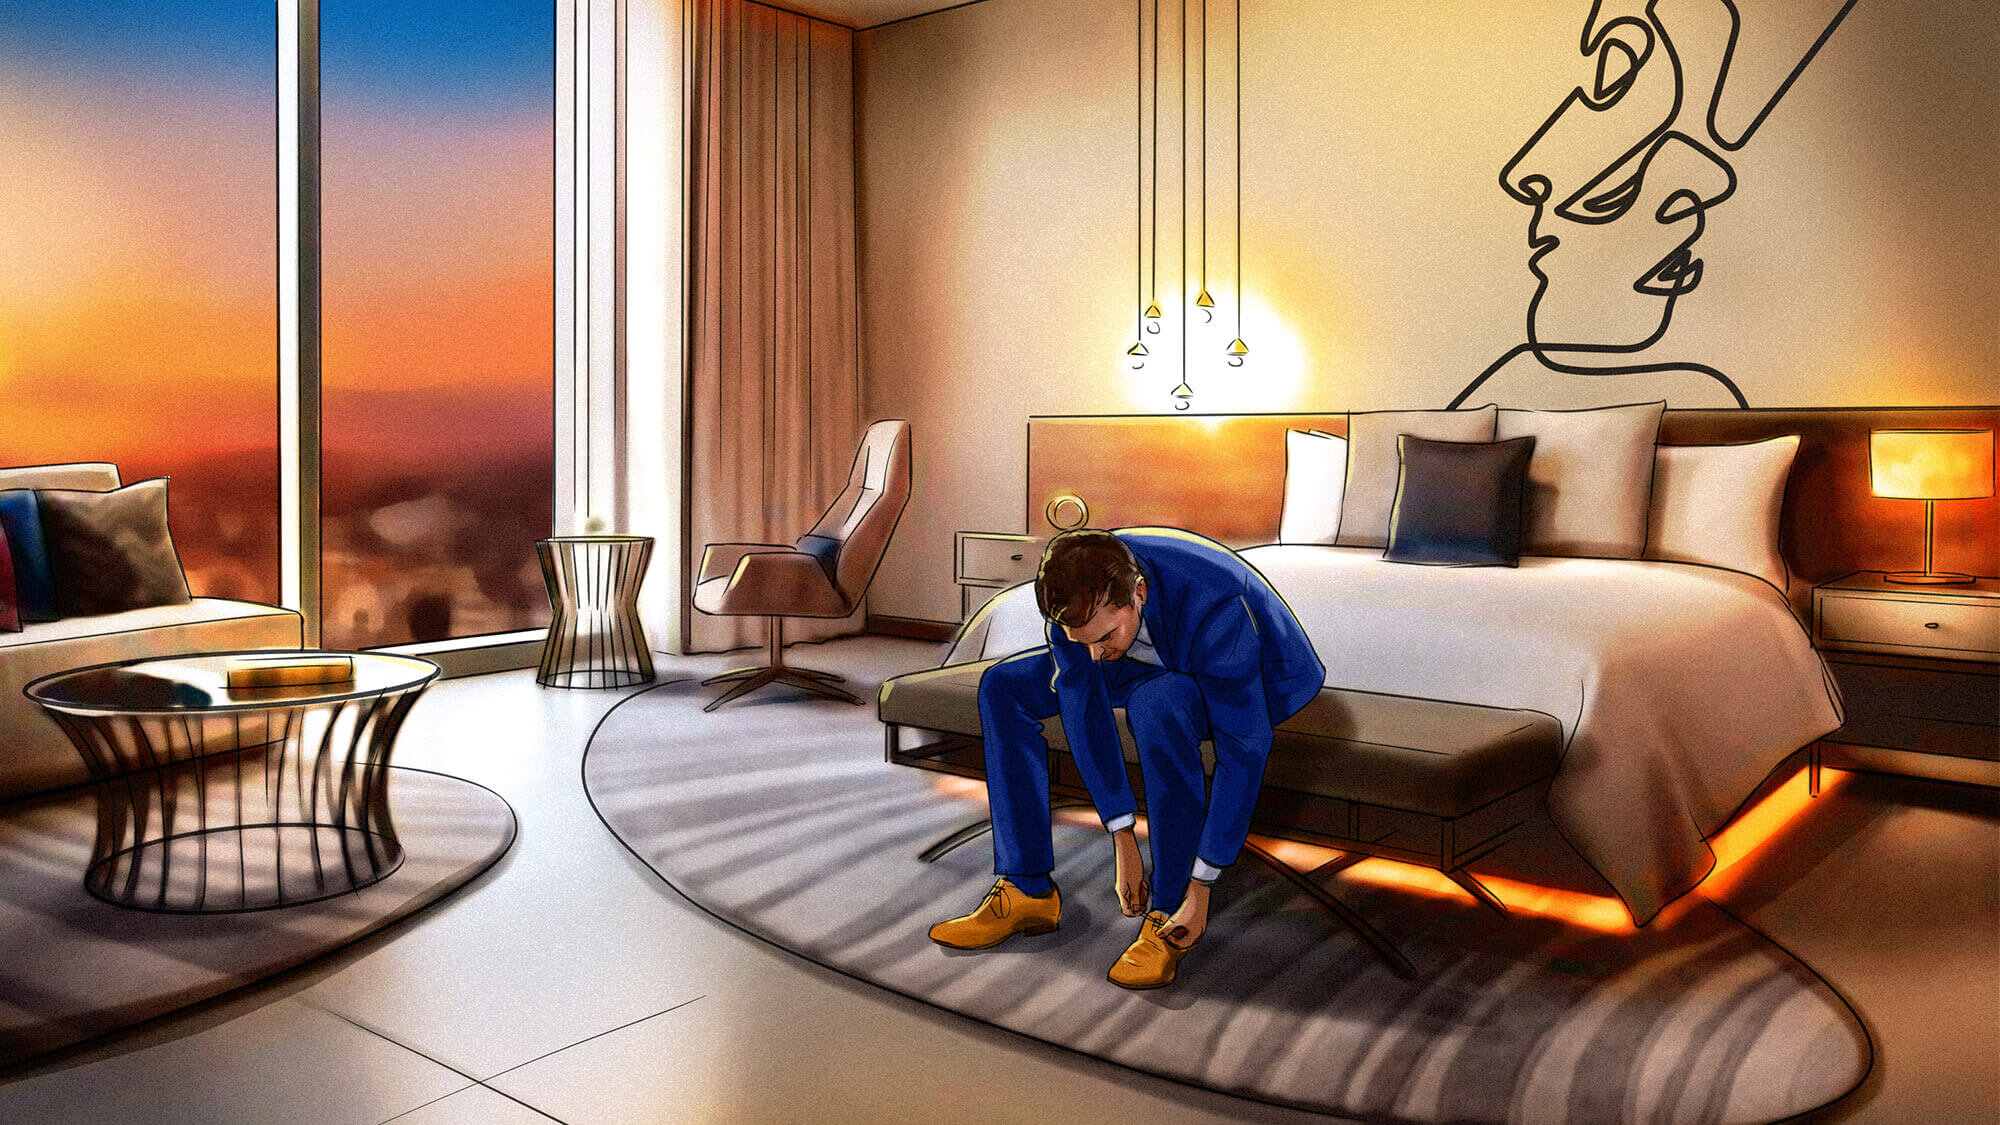 Renaissance_Hotels_Storyboards_1.jpg